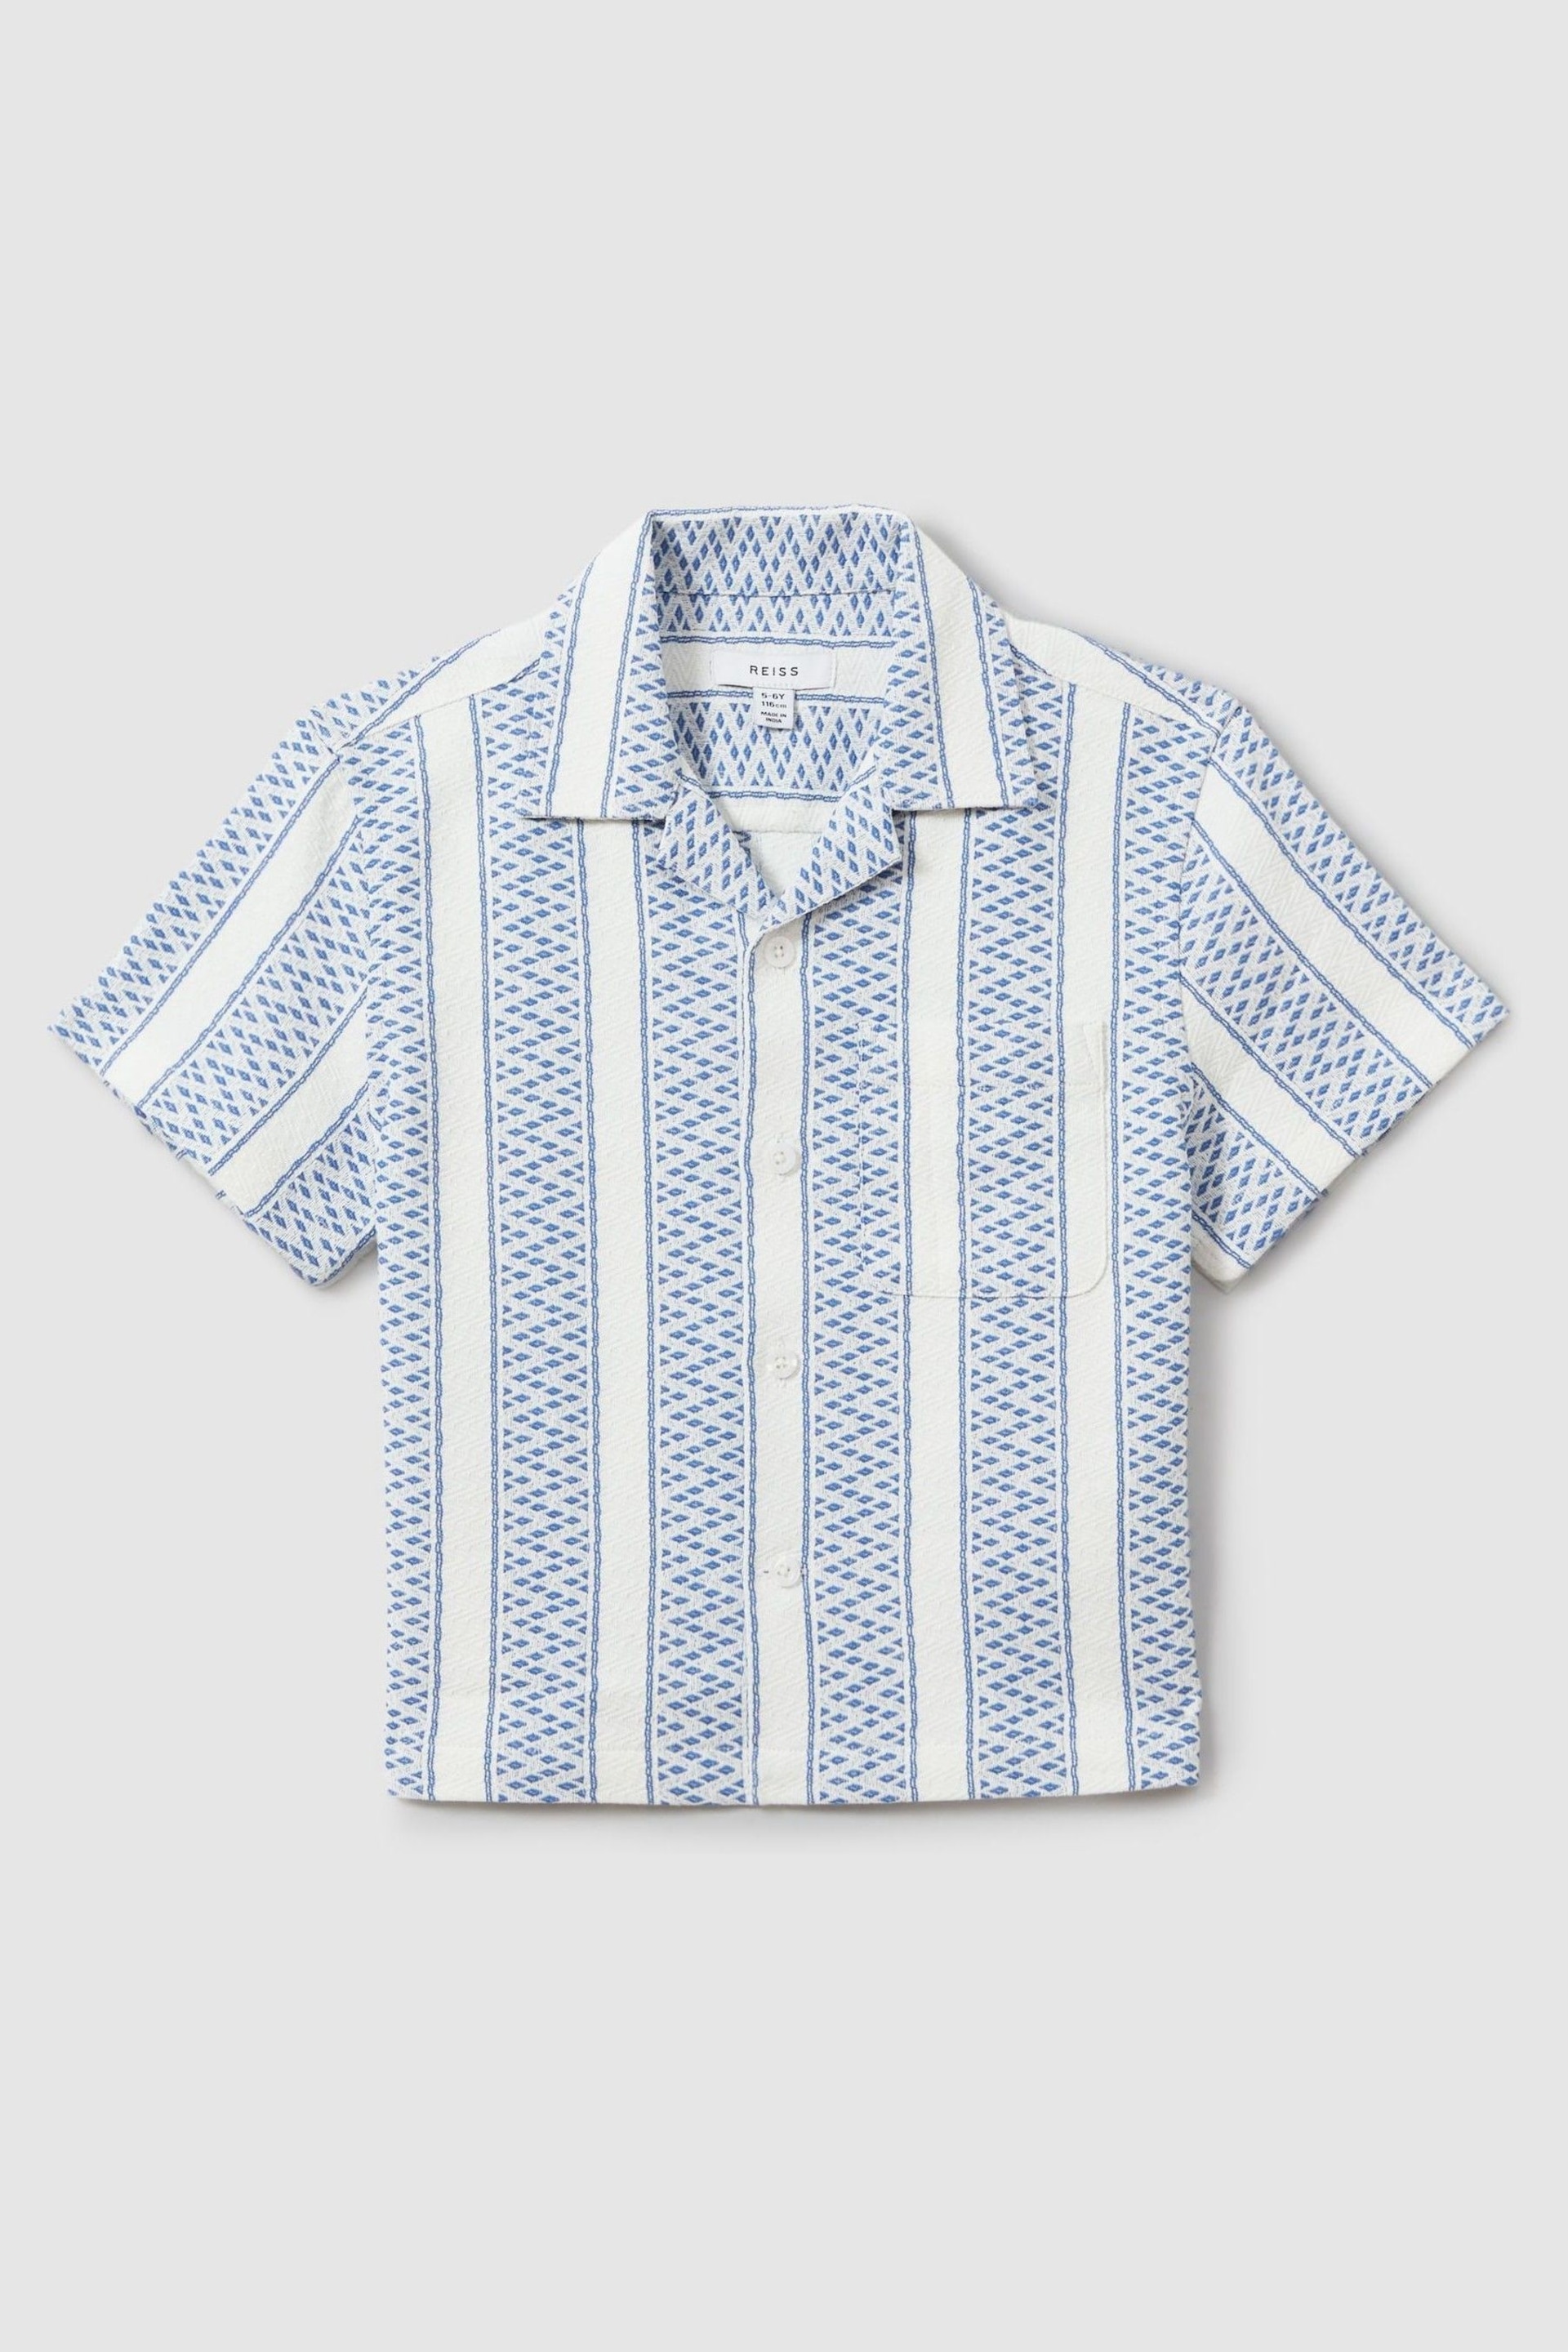 Reiss Blue/White Kesh Senior Herringbone Cuban Collar Shirt - Image 2 of 5